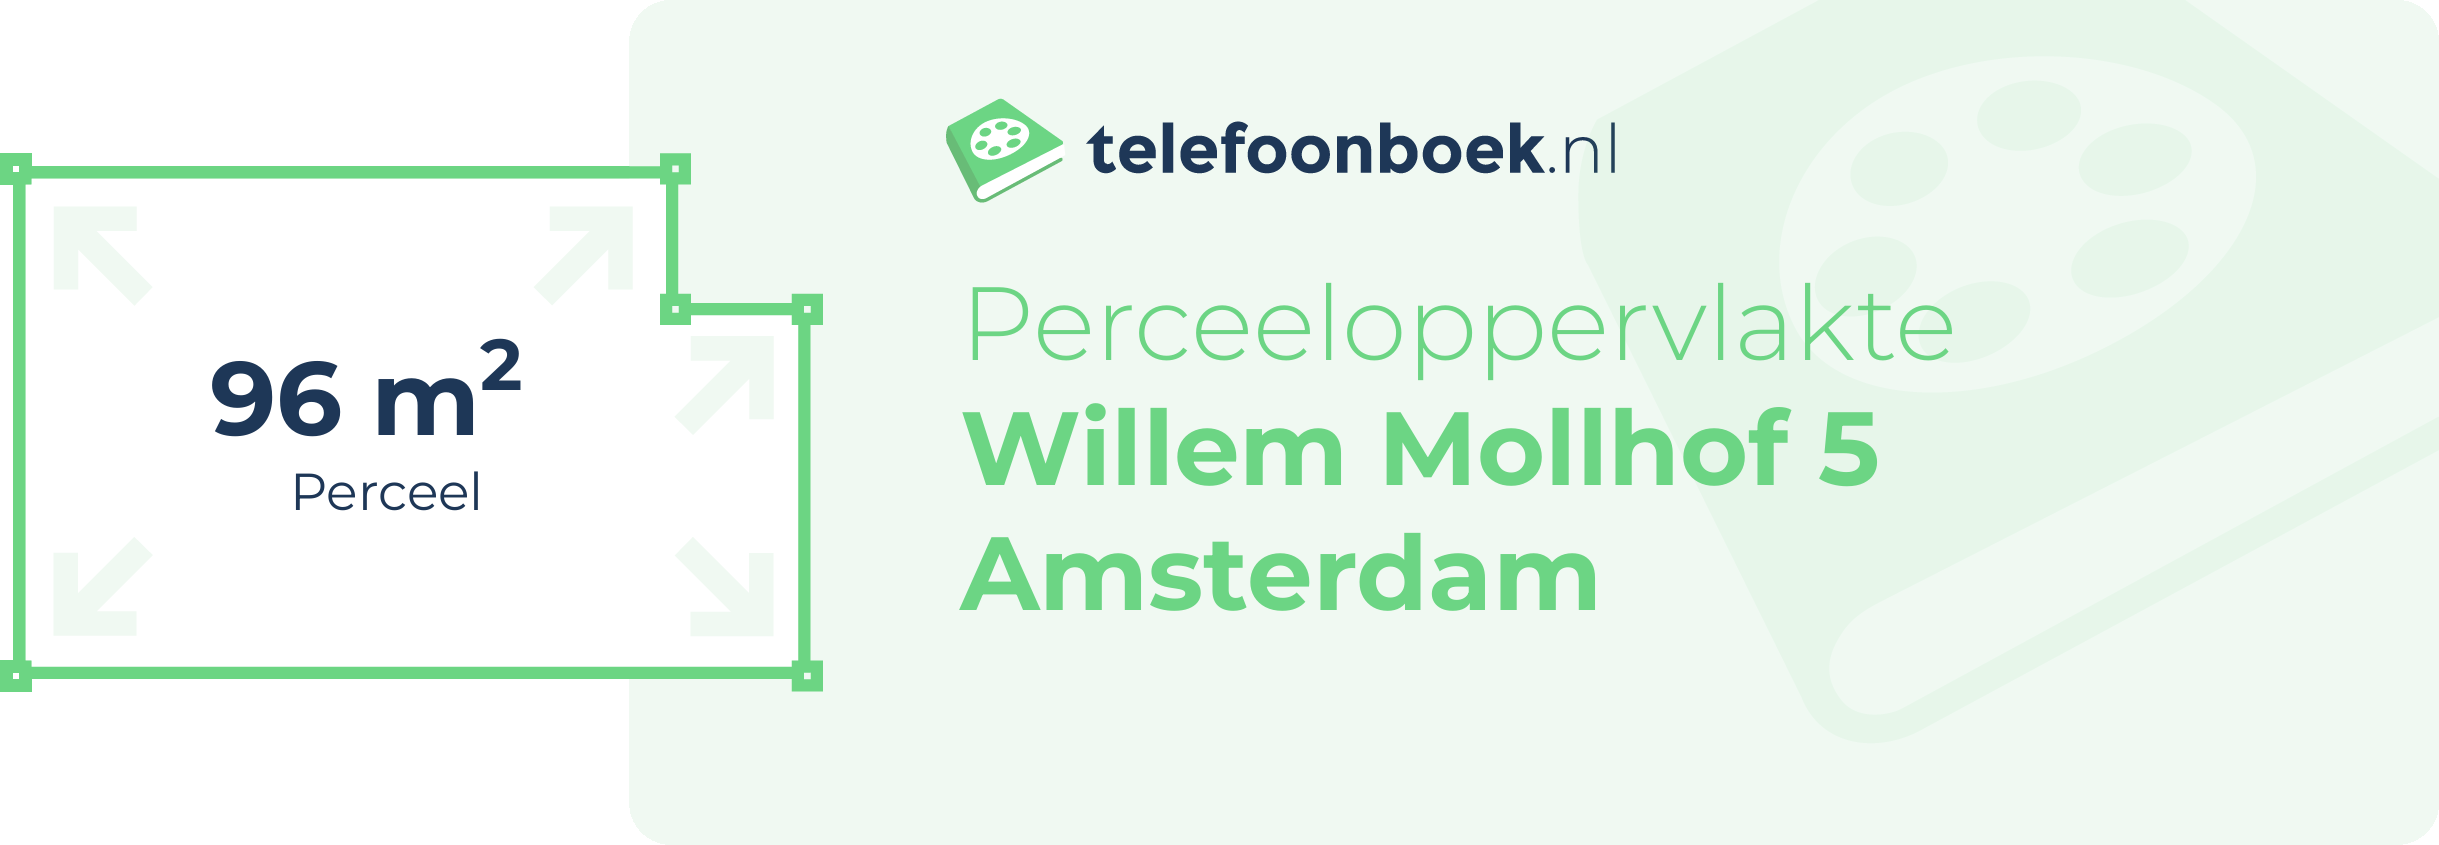 Perceeloppervlakte Willem Mollhof 5 Amsterdam